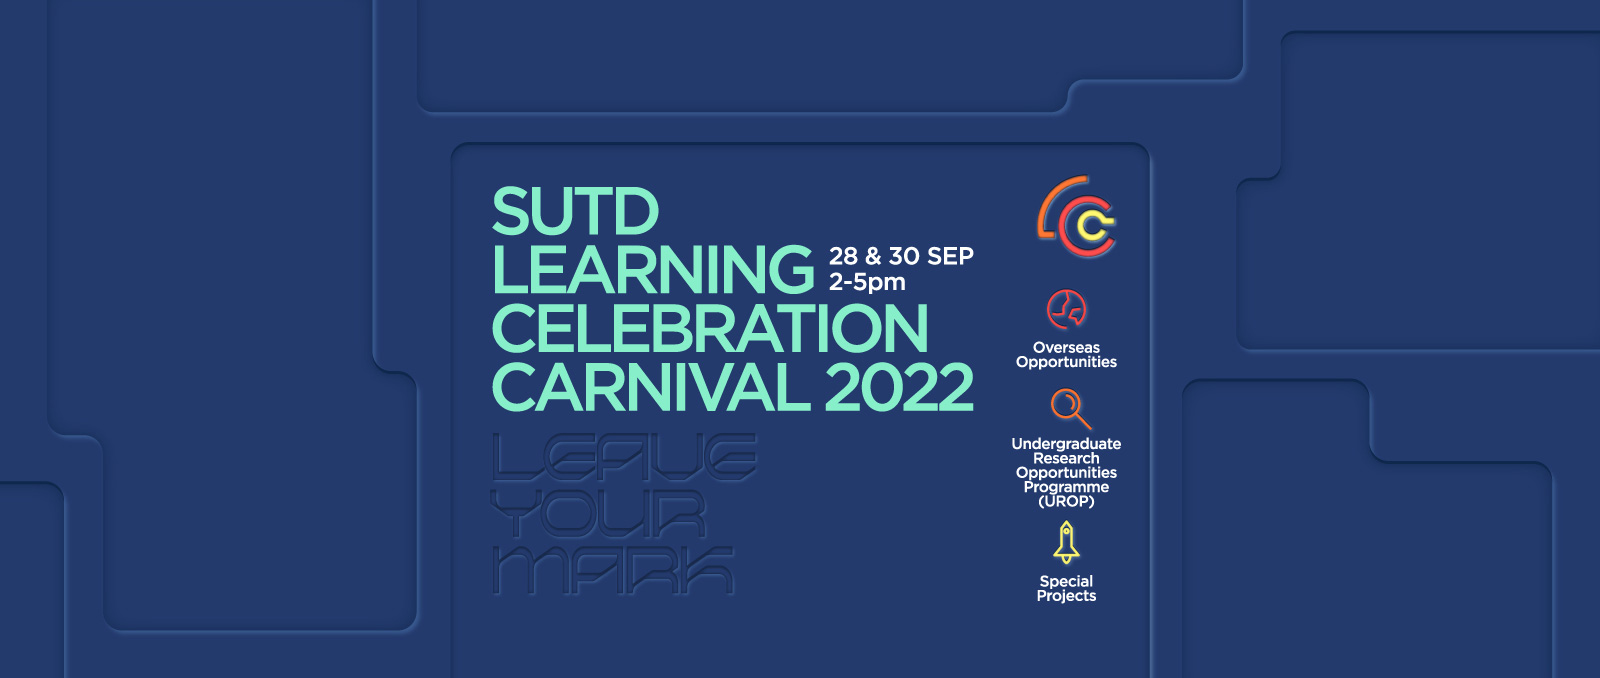 Learning Celebration Carnival